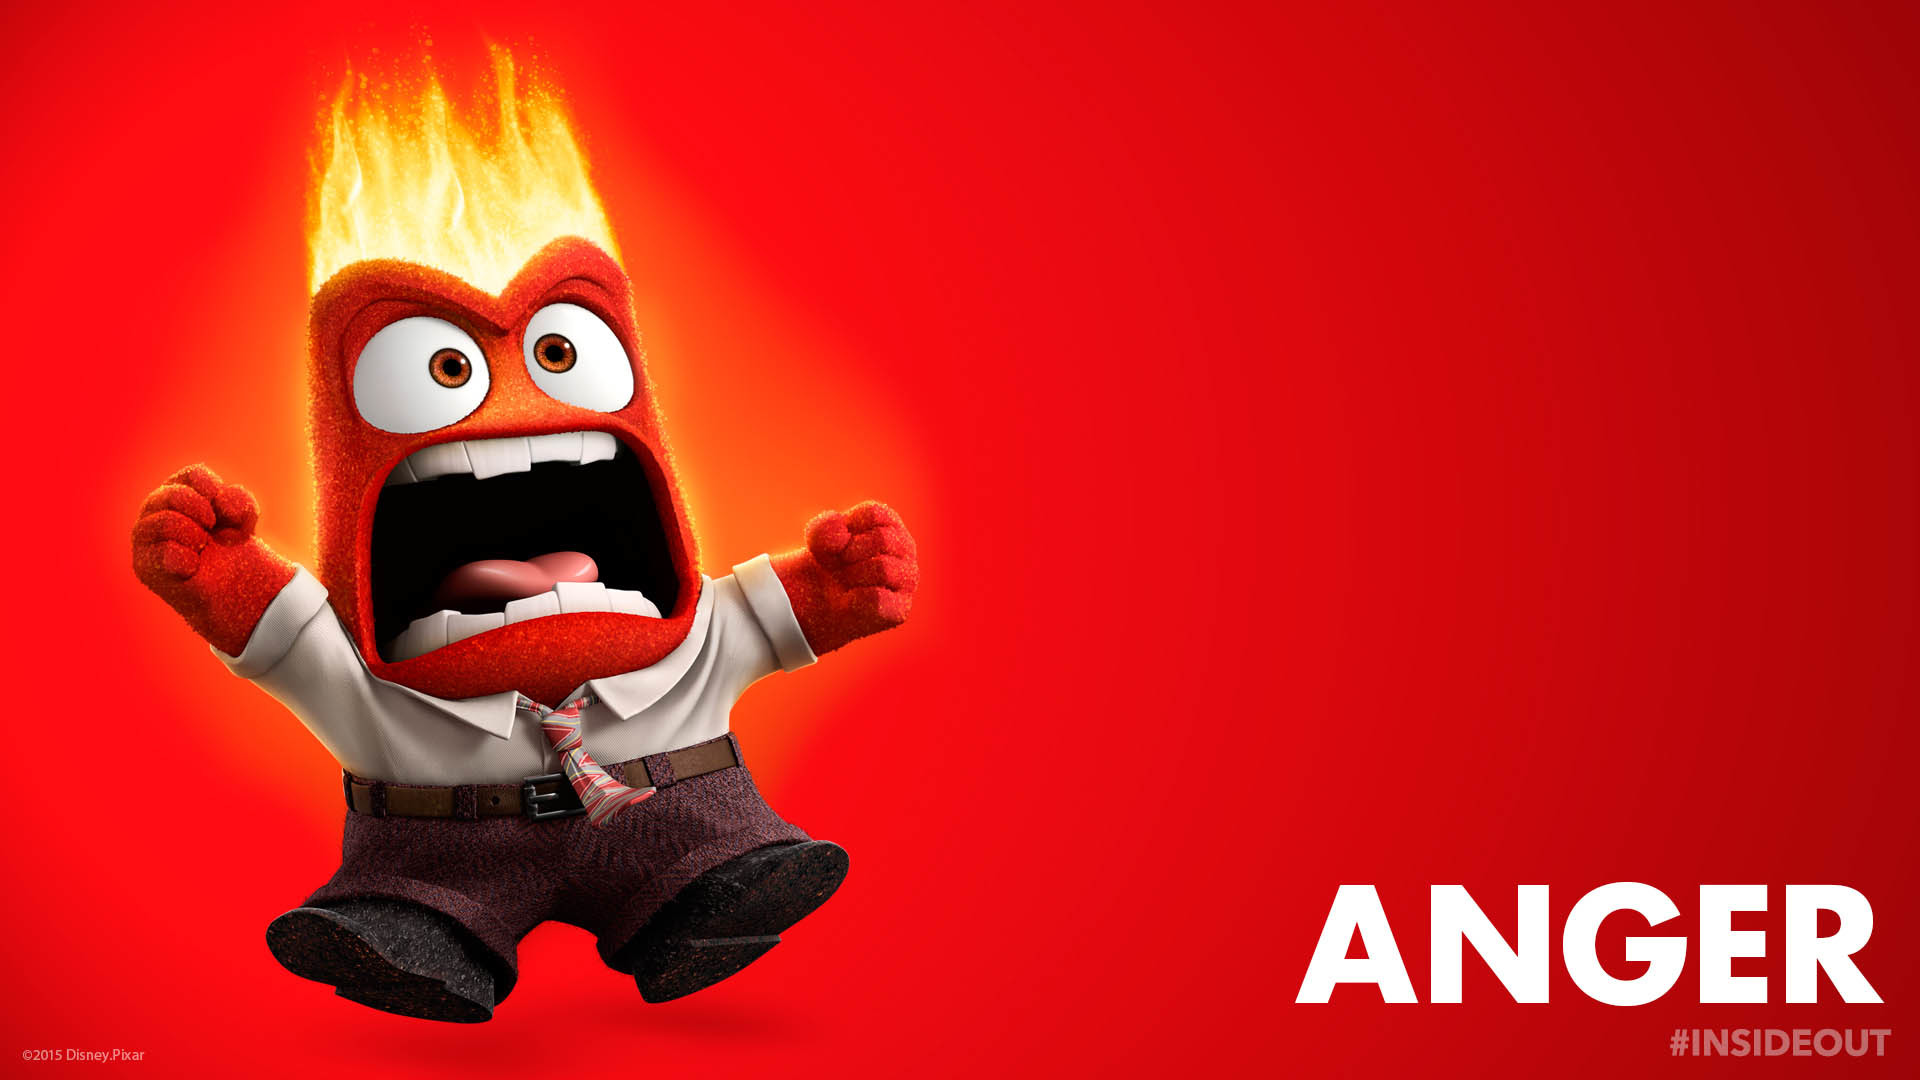 1920x1080 Inside Out character: Anger - Disney Pixar  wallpaper